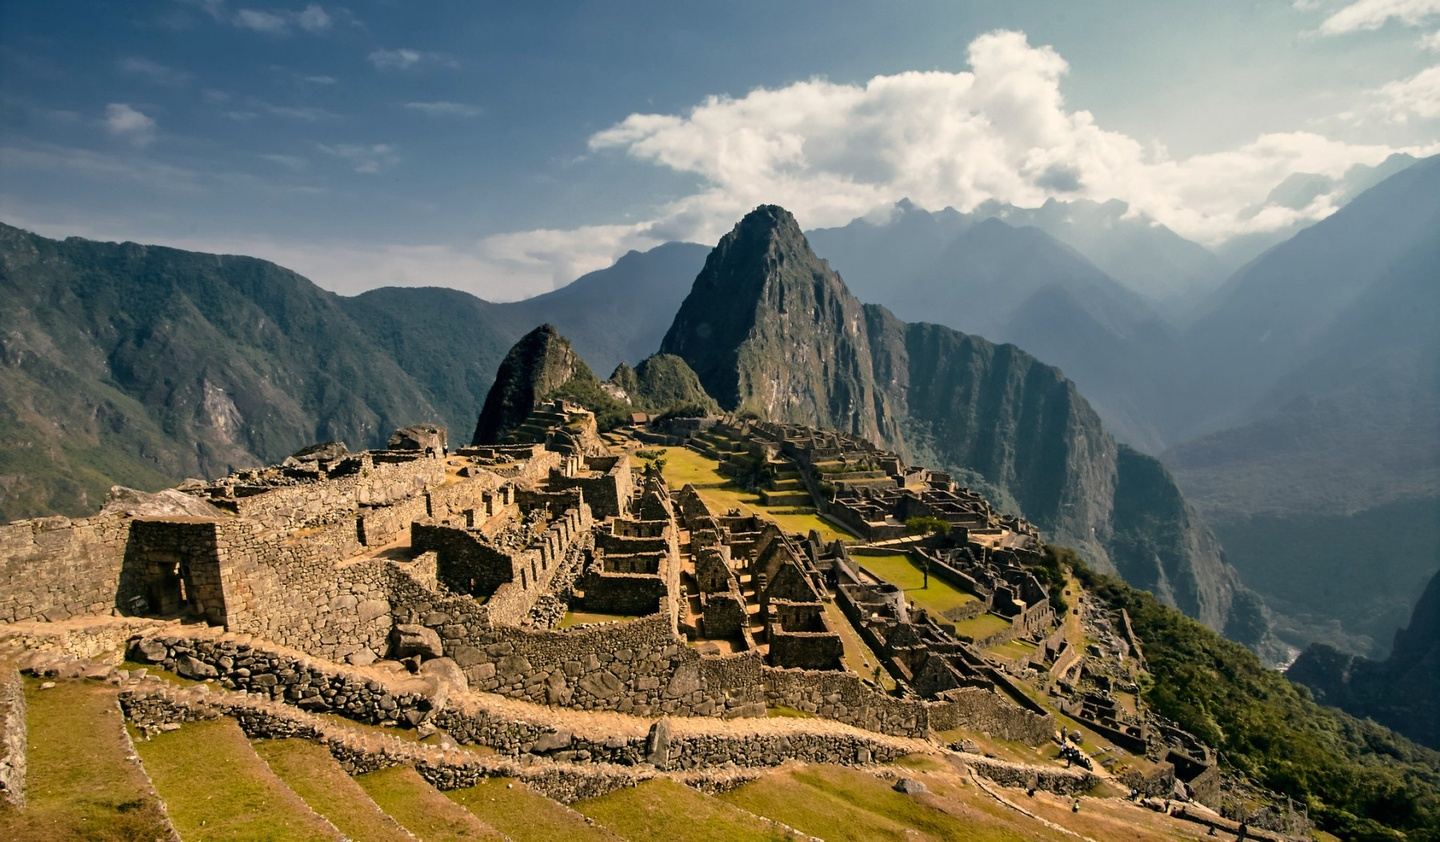 Machu Picchu / Huchuy Picchu Ticket 2:00 pm -  Citlalli Barraza